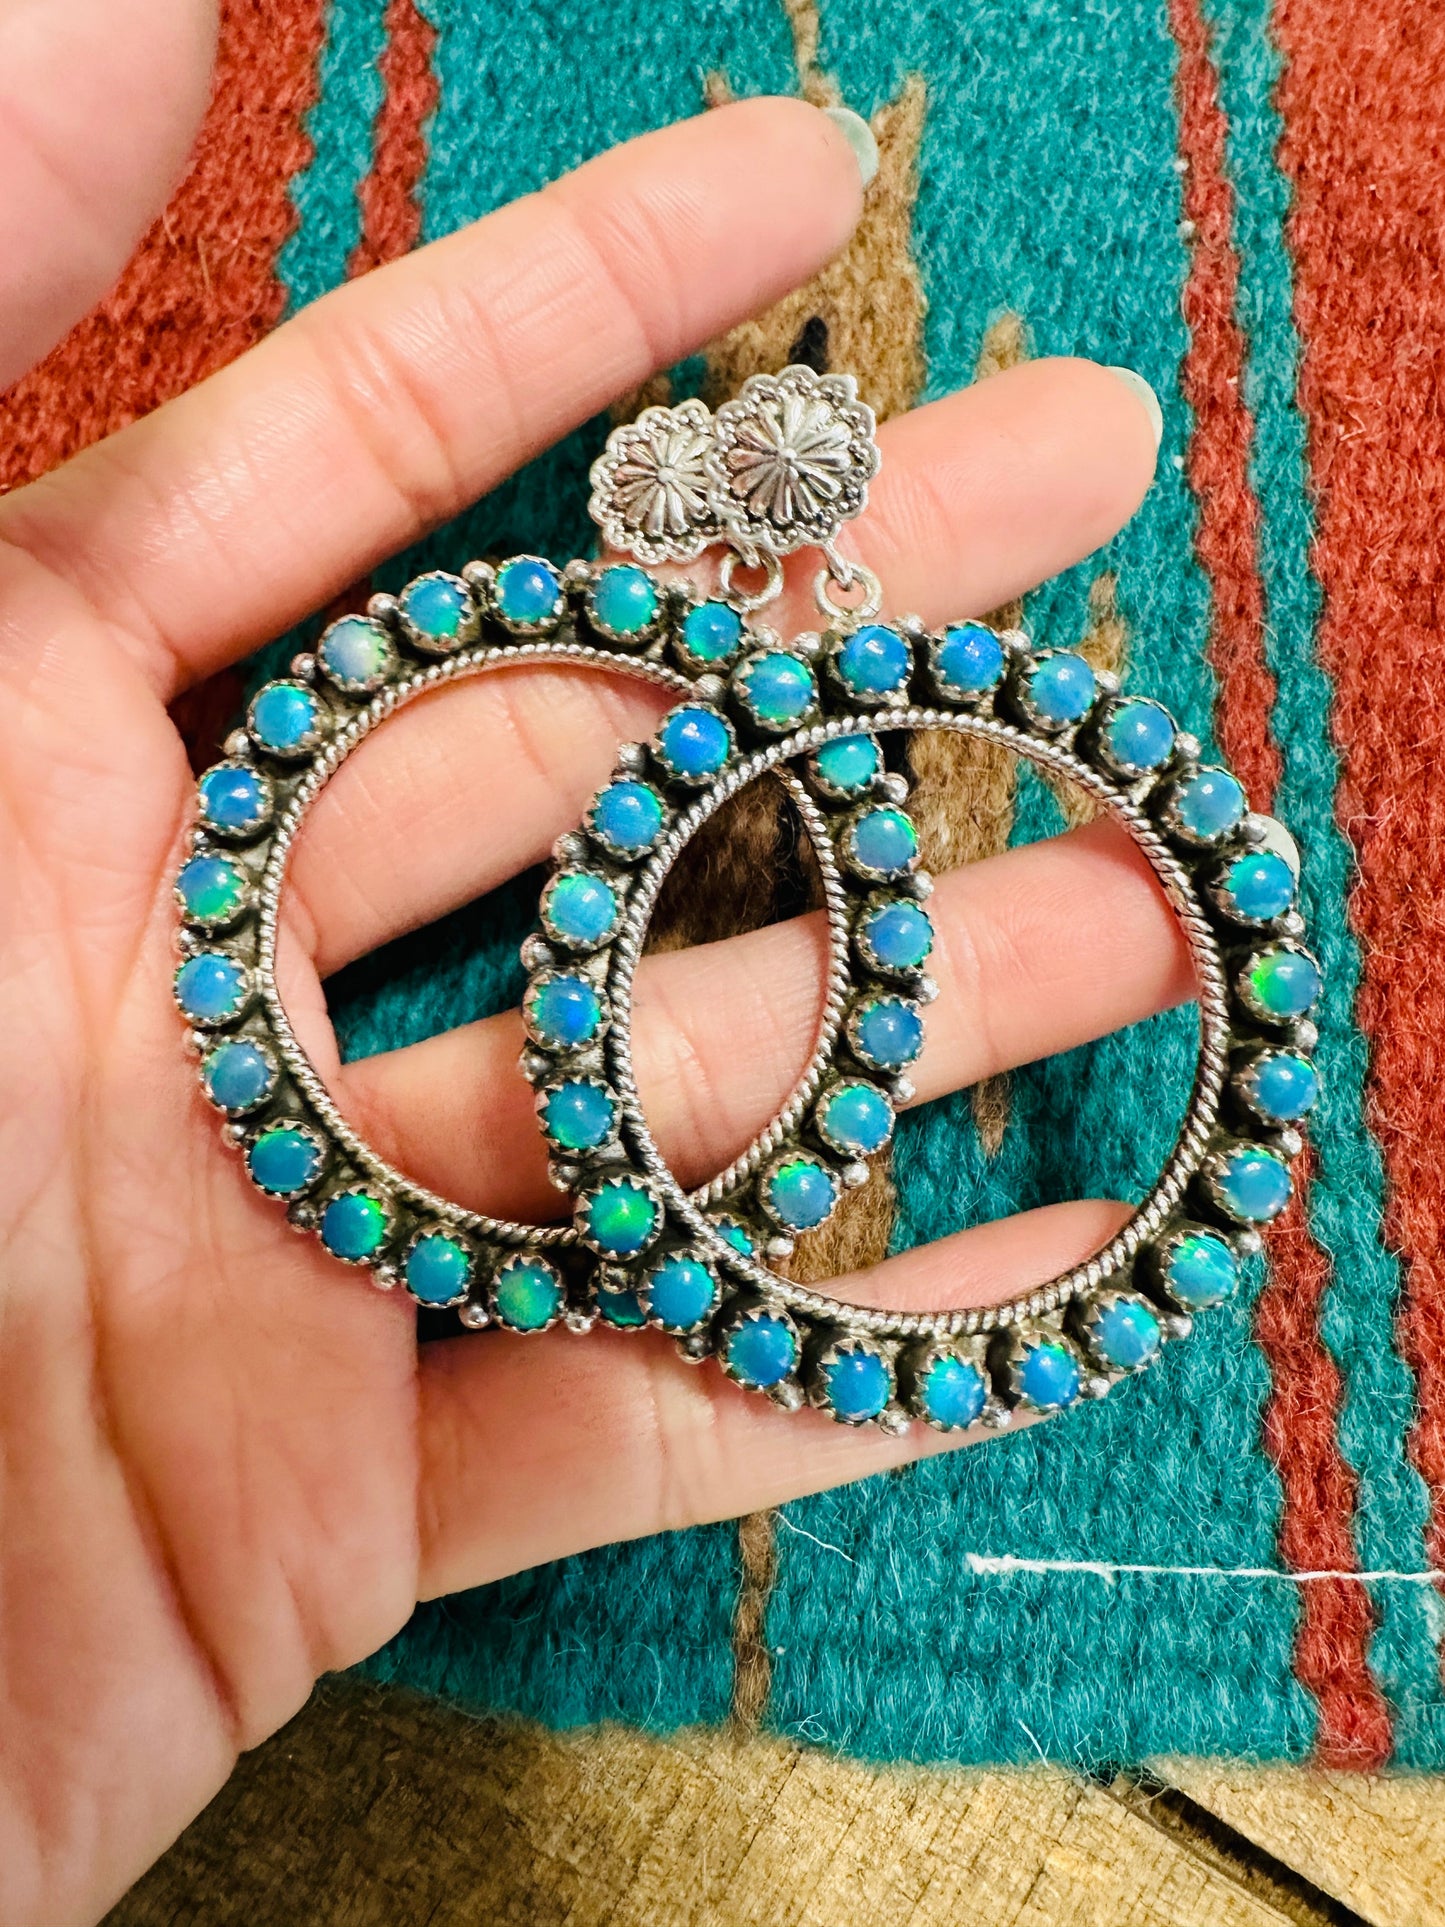 Handmade Blue Opal & Sterling Silver Dangle Hoop Earrings Signed Nizhoni